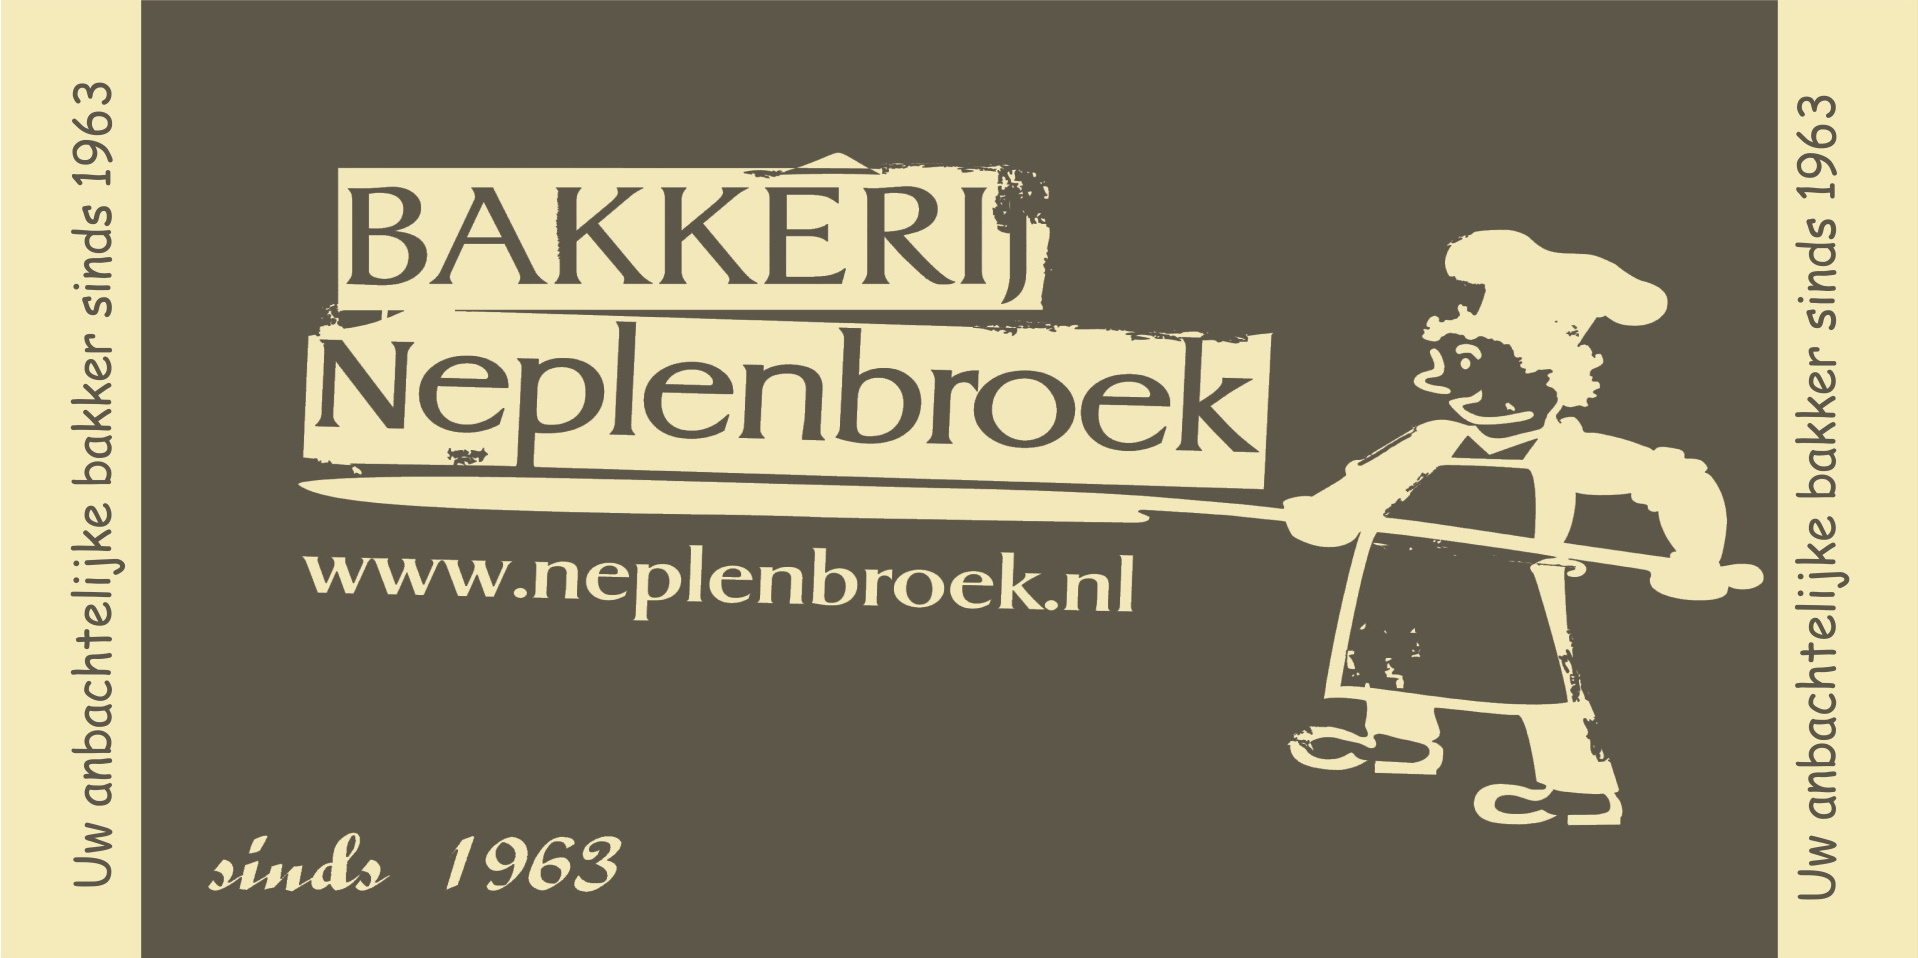 Webshop Bakkerij Neplenbroek logo